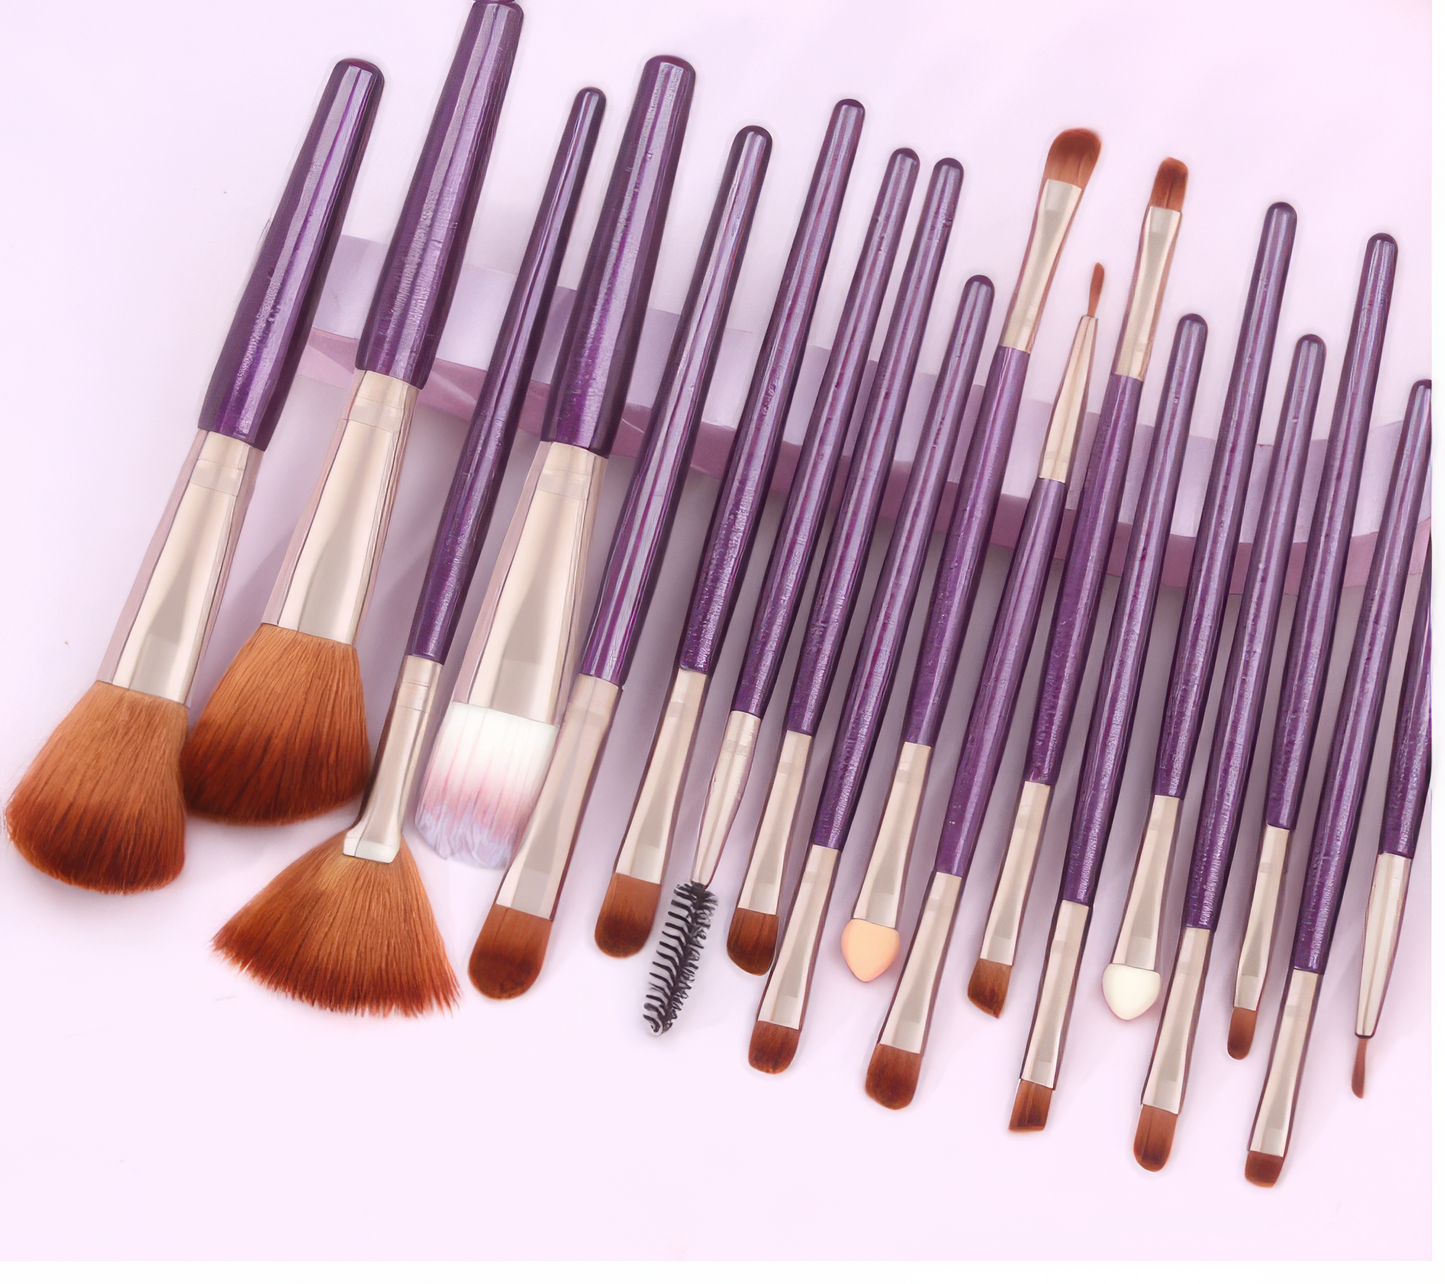 18 Pc Full Line Makeup Brush Set in Plum